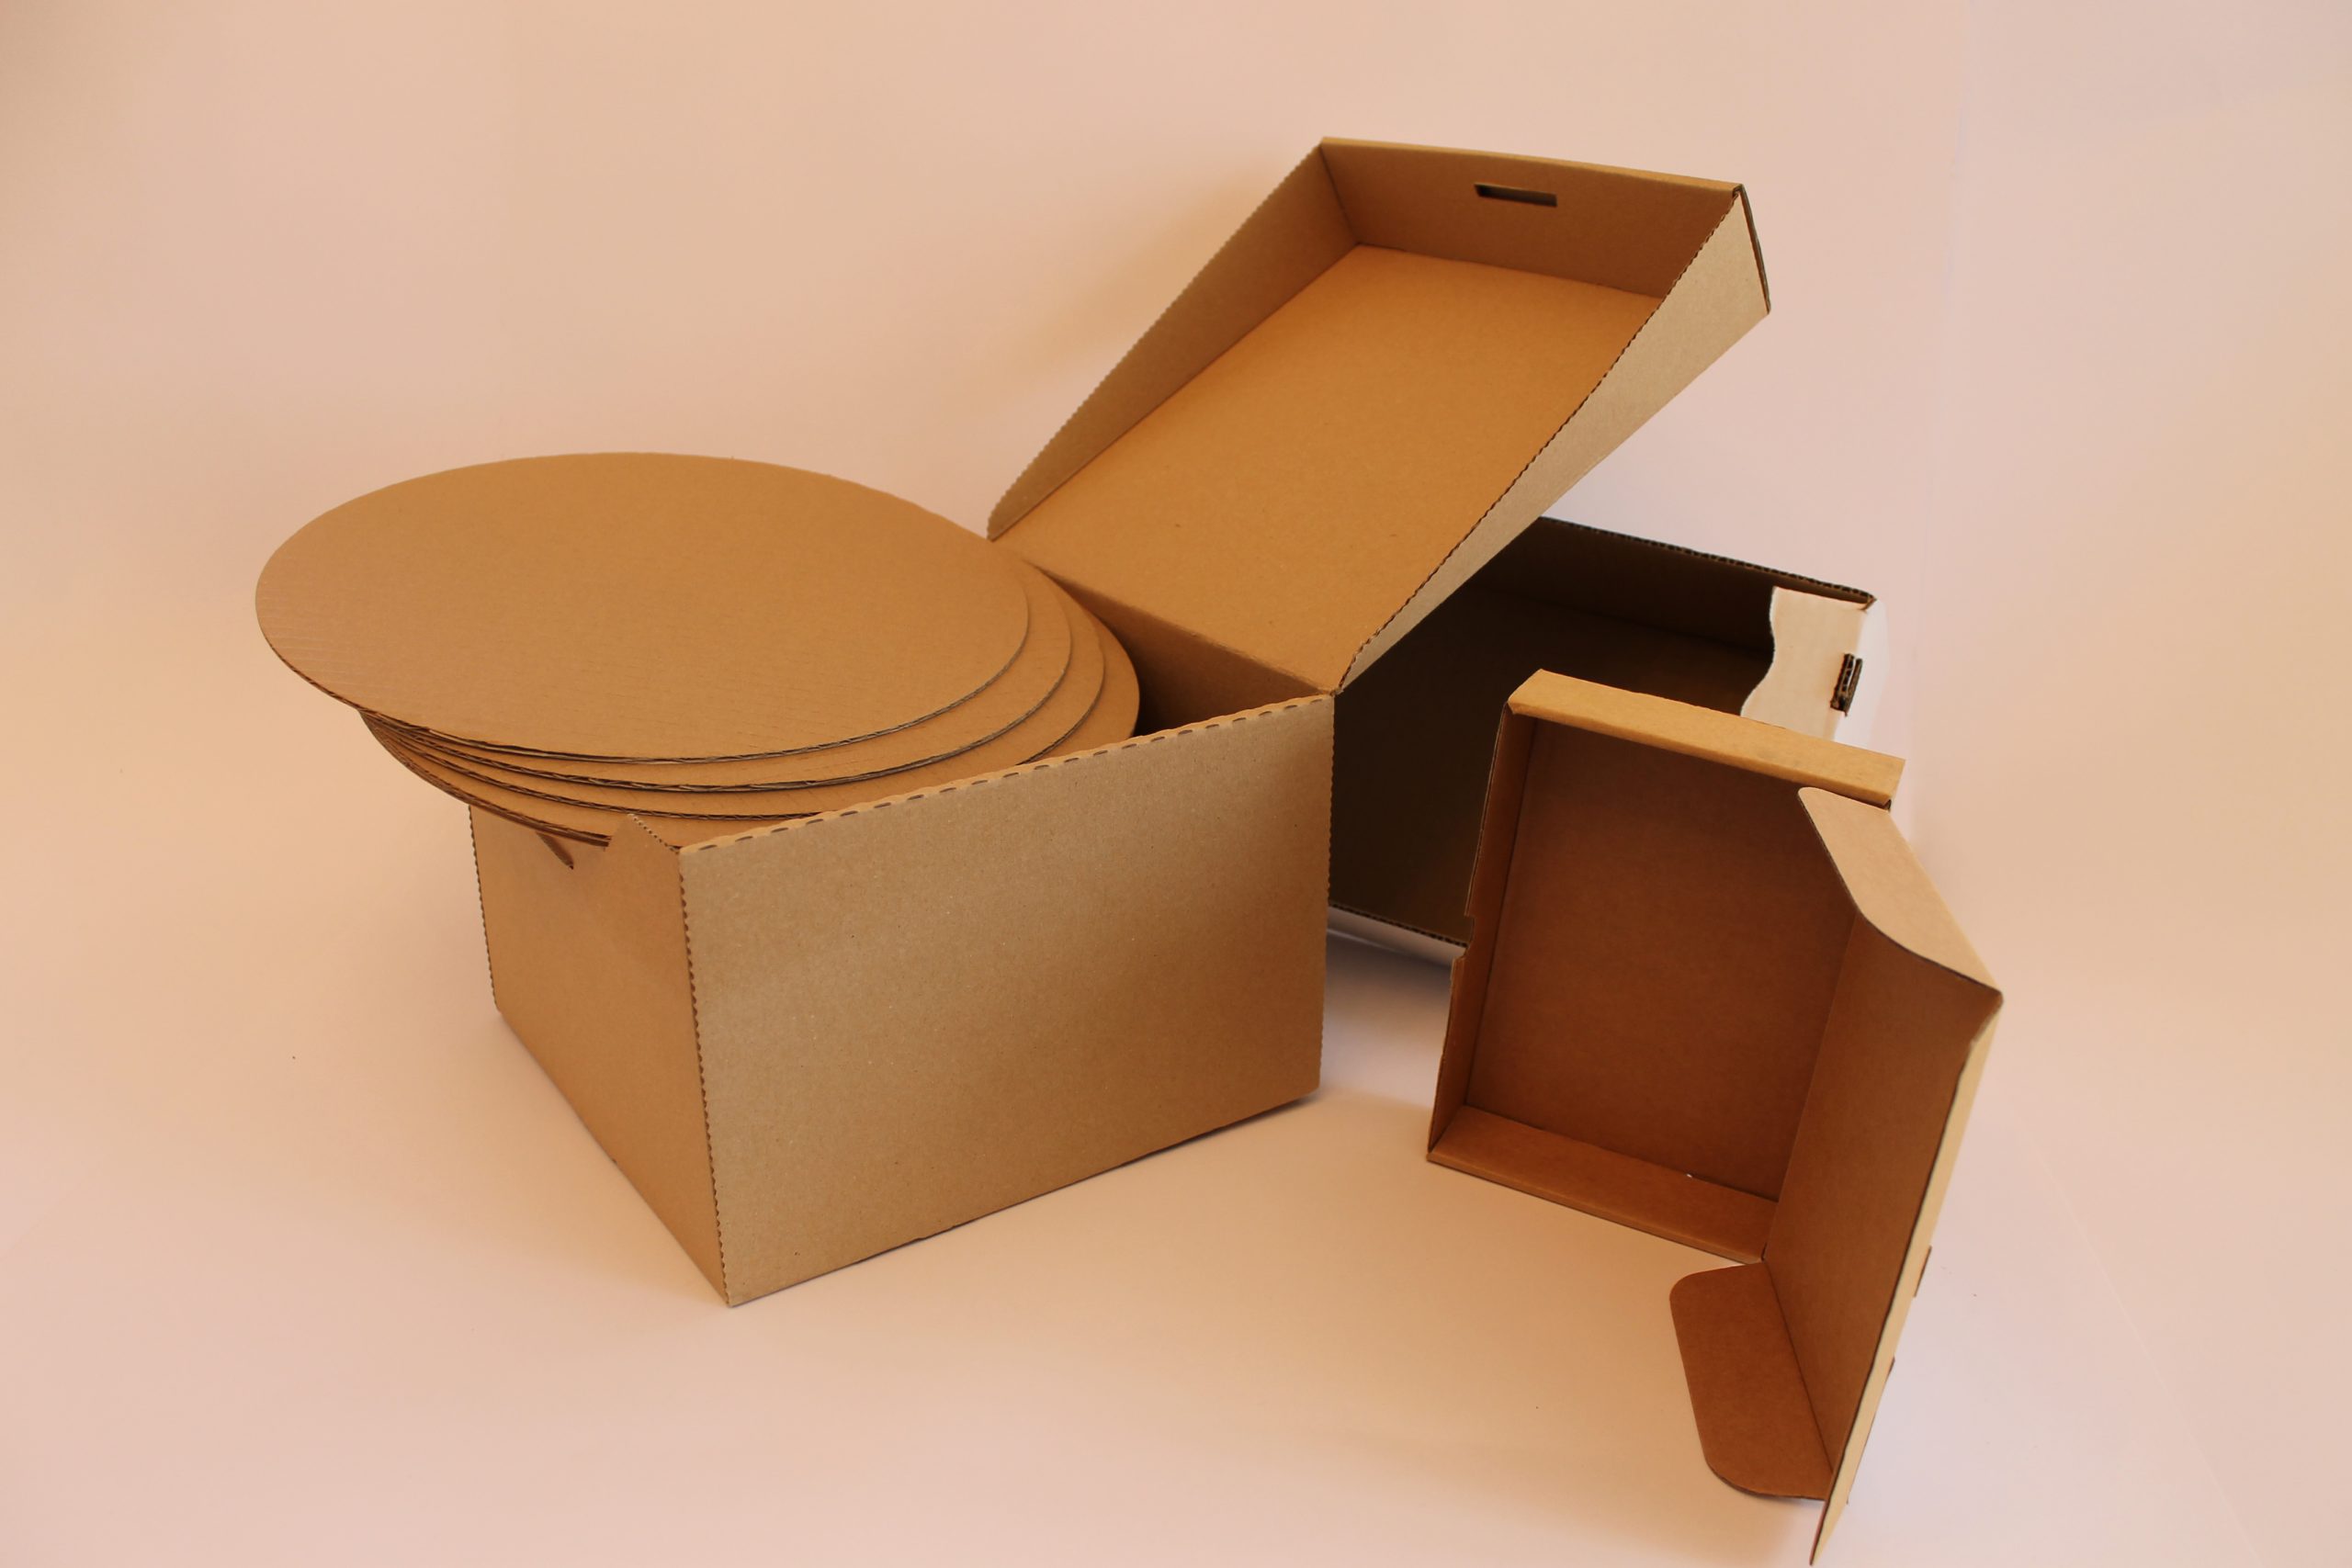 Custom Cardboard Display Boxes can be used to display a customer’s